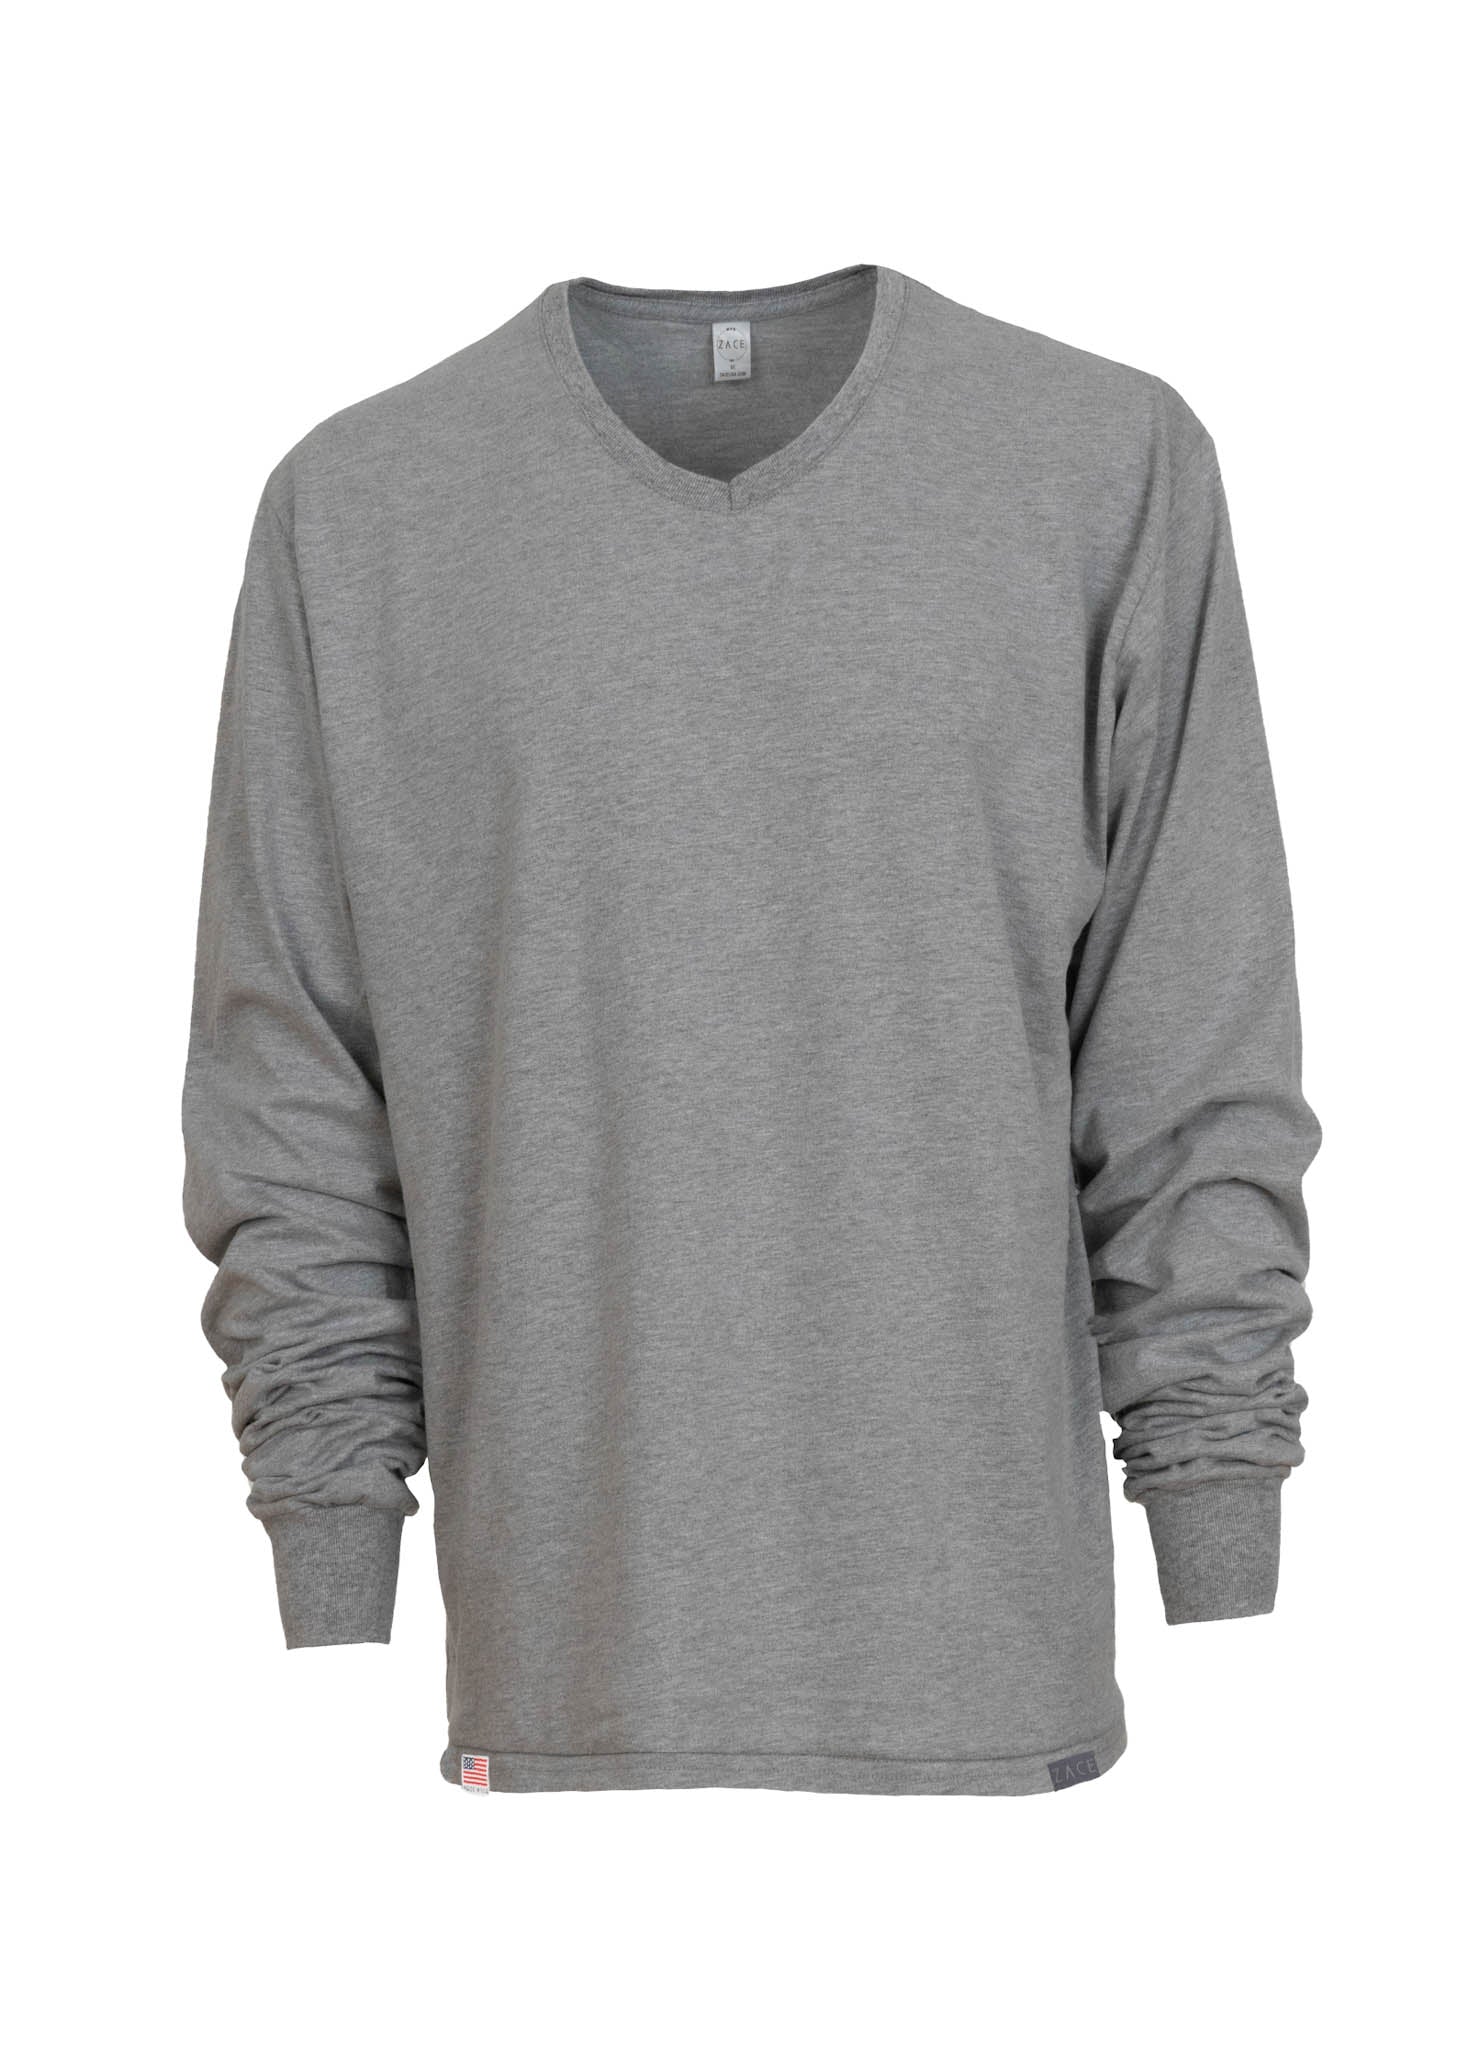 Long Sleeve V-Neck Work Tee Shirt Grey